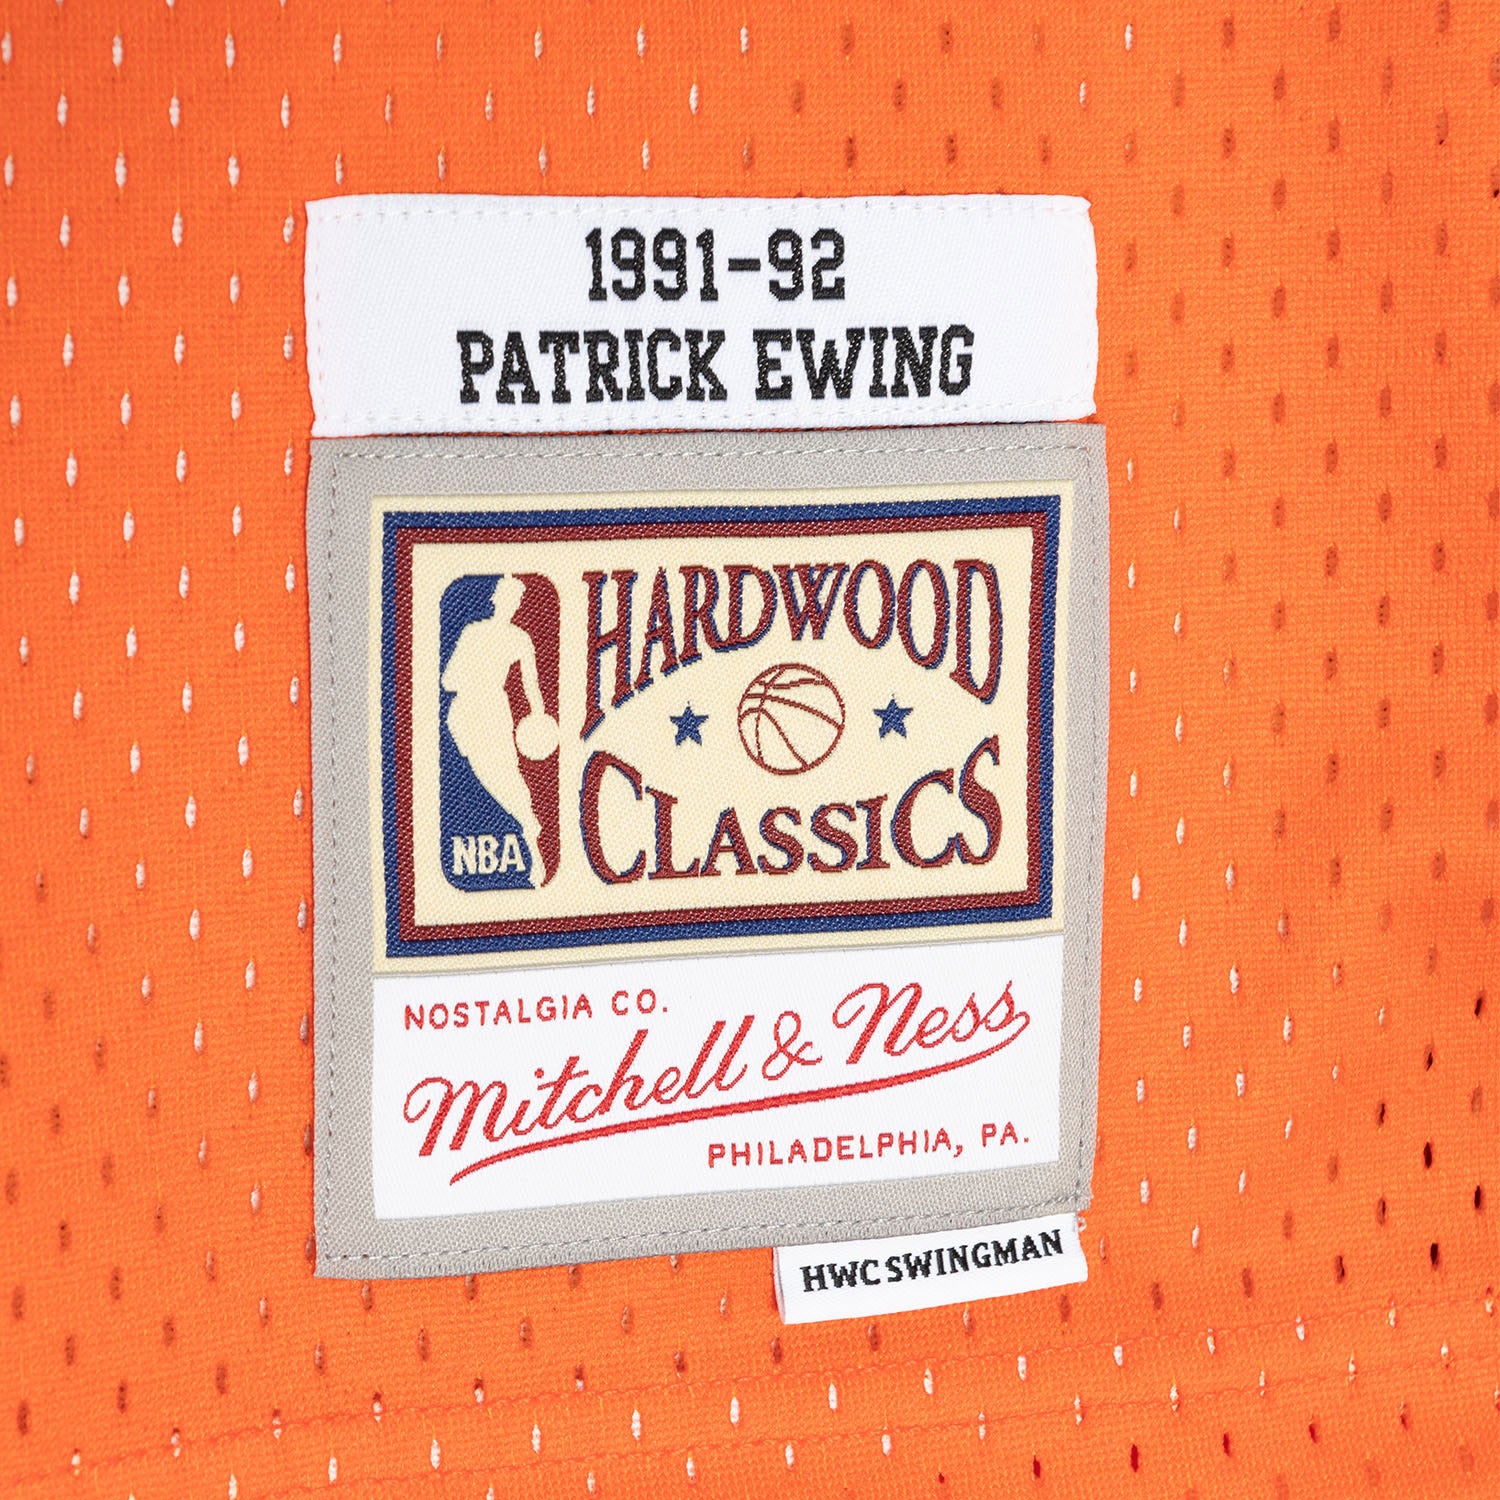 Youth Mitchell & Ness Patrick Ewing Blue New York Knicks Hardwood Classics  Swingman Throwback Jersey